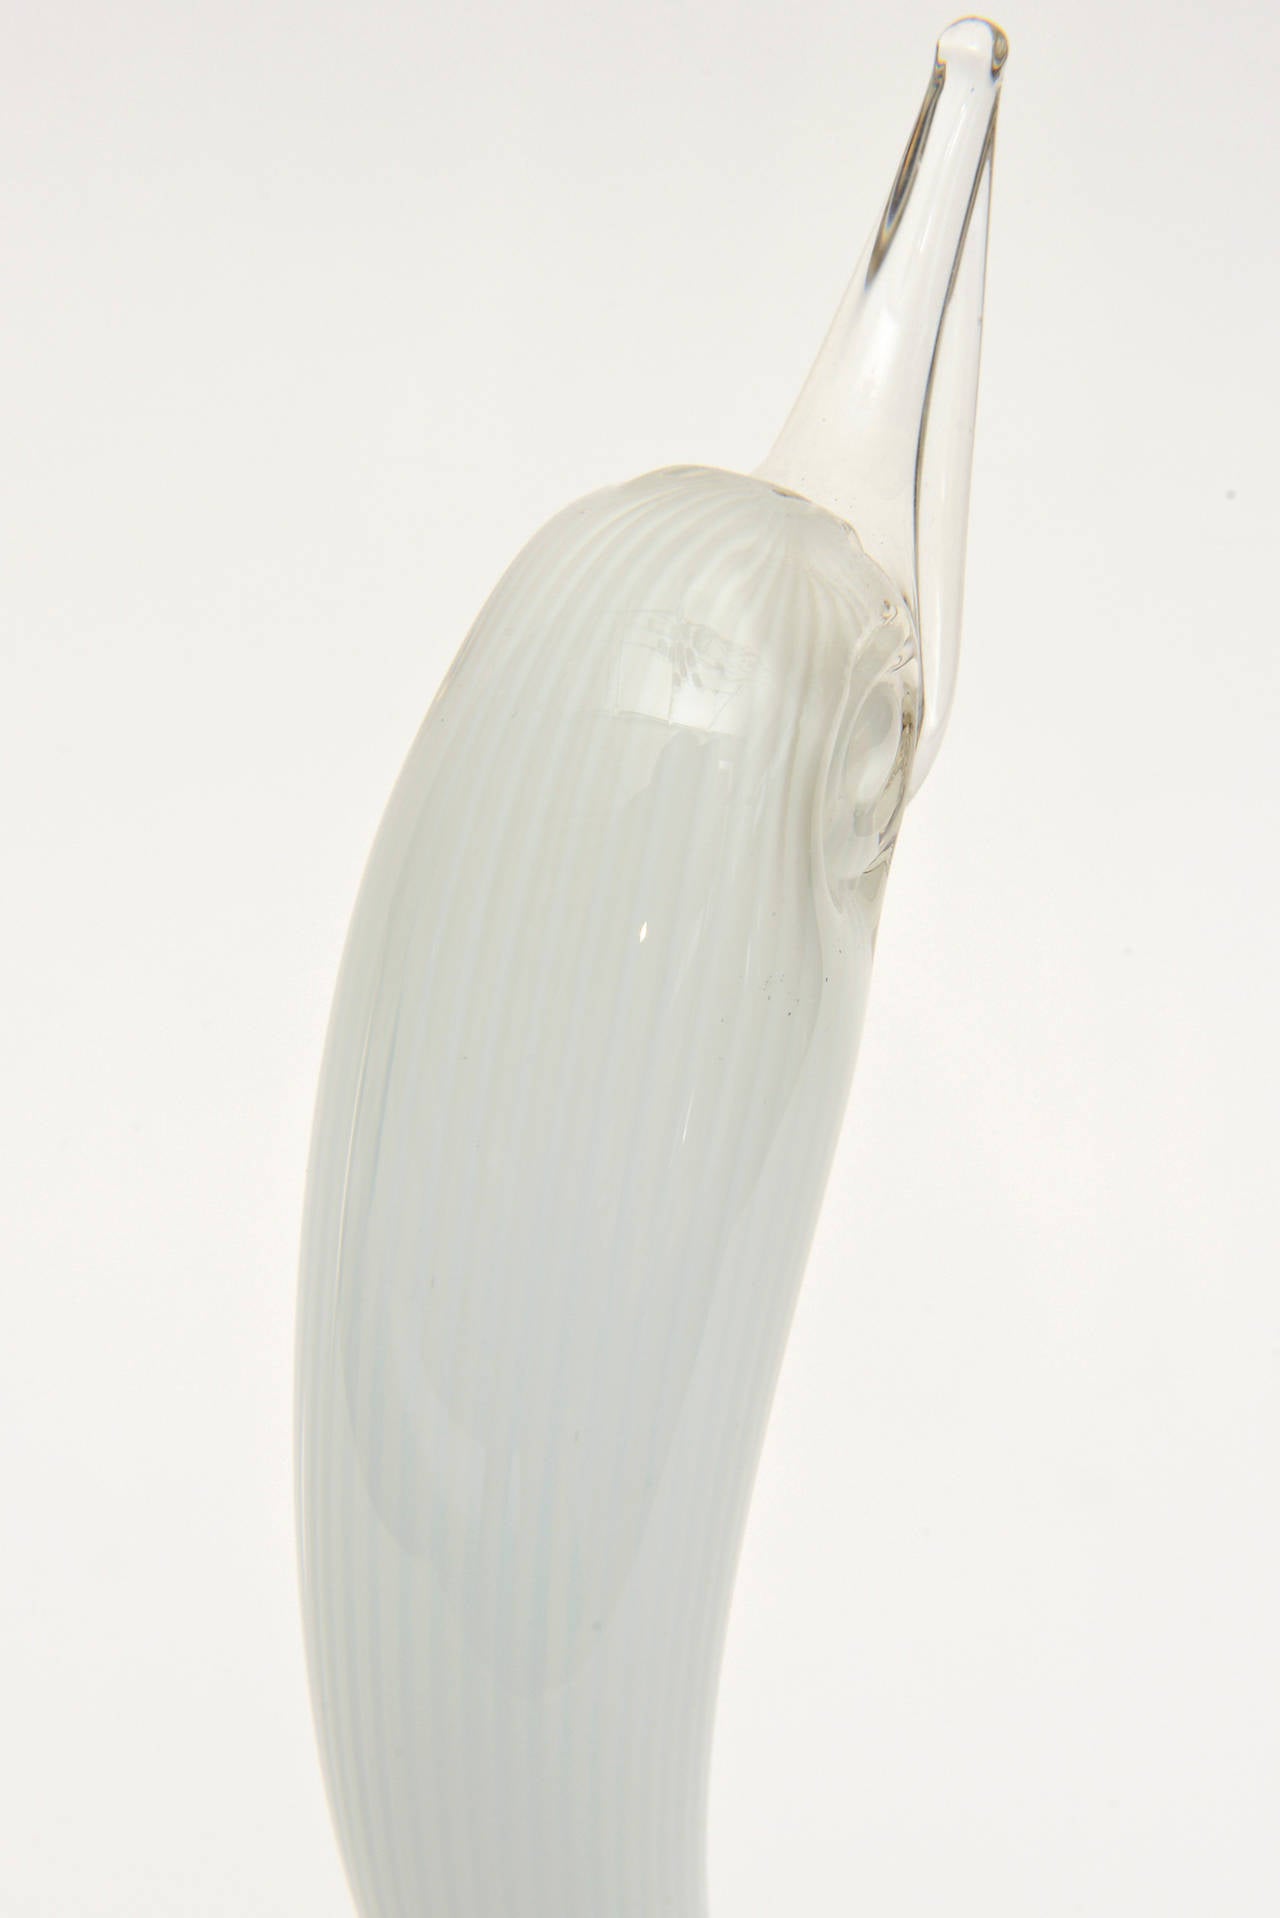 Murano Seguso Vintage White Swan Glass Sculpture For Sale 1